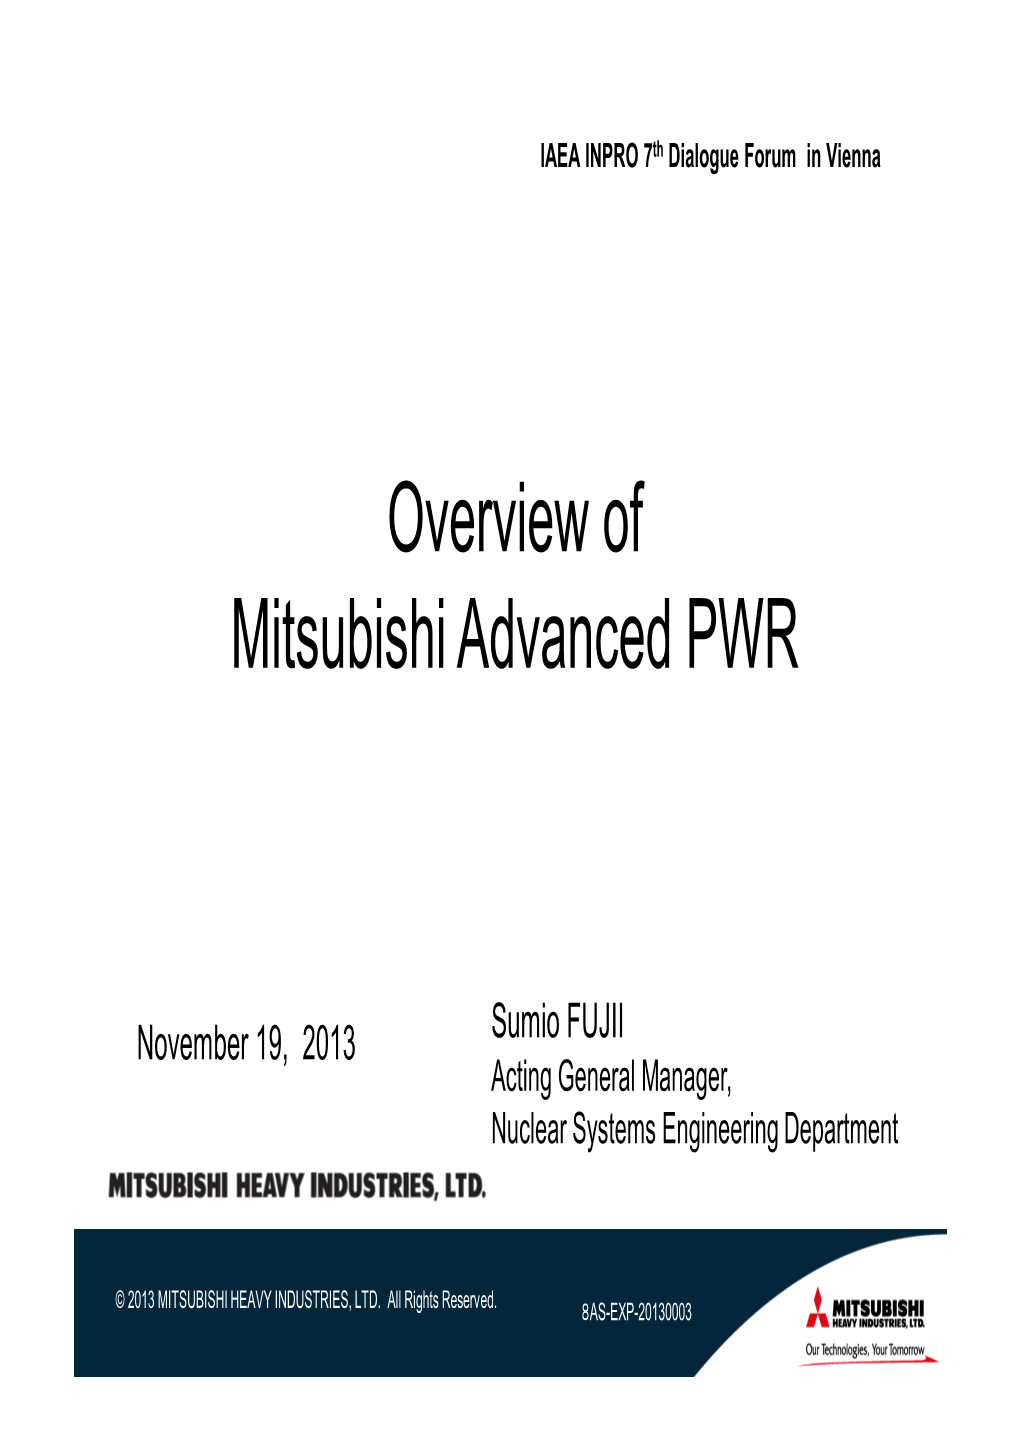 Overview of Mitsubishi Advanced PWR